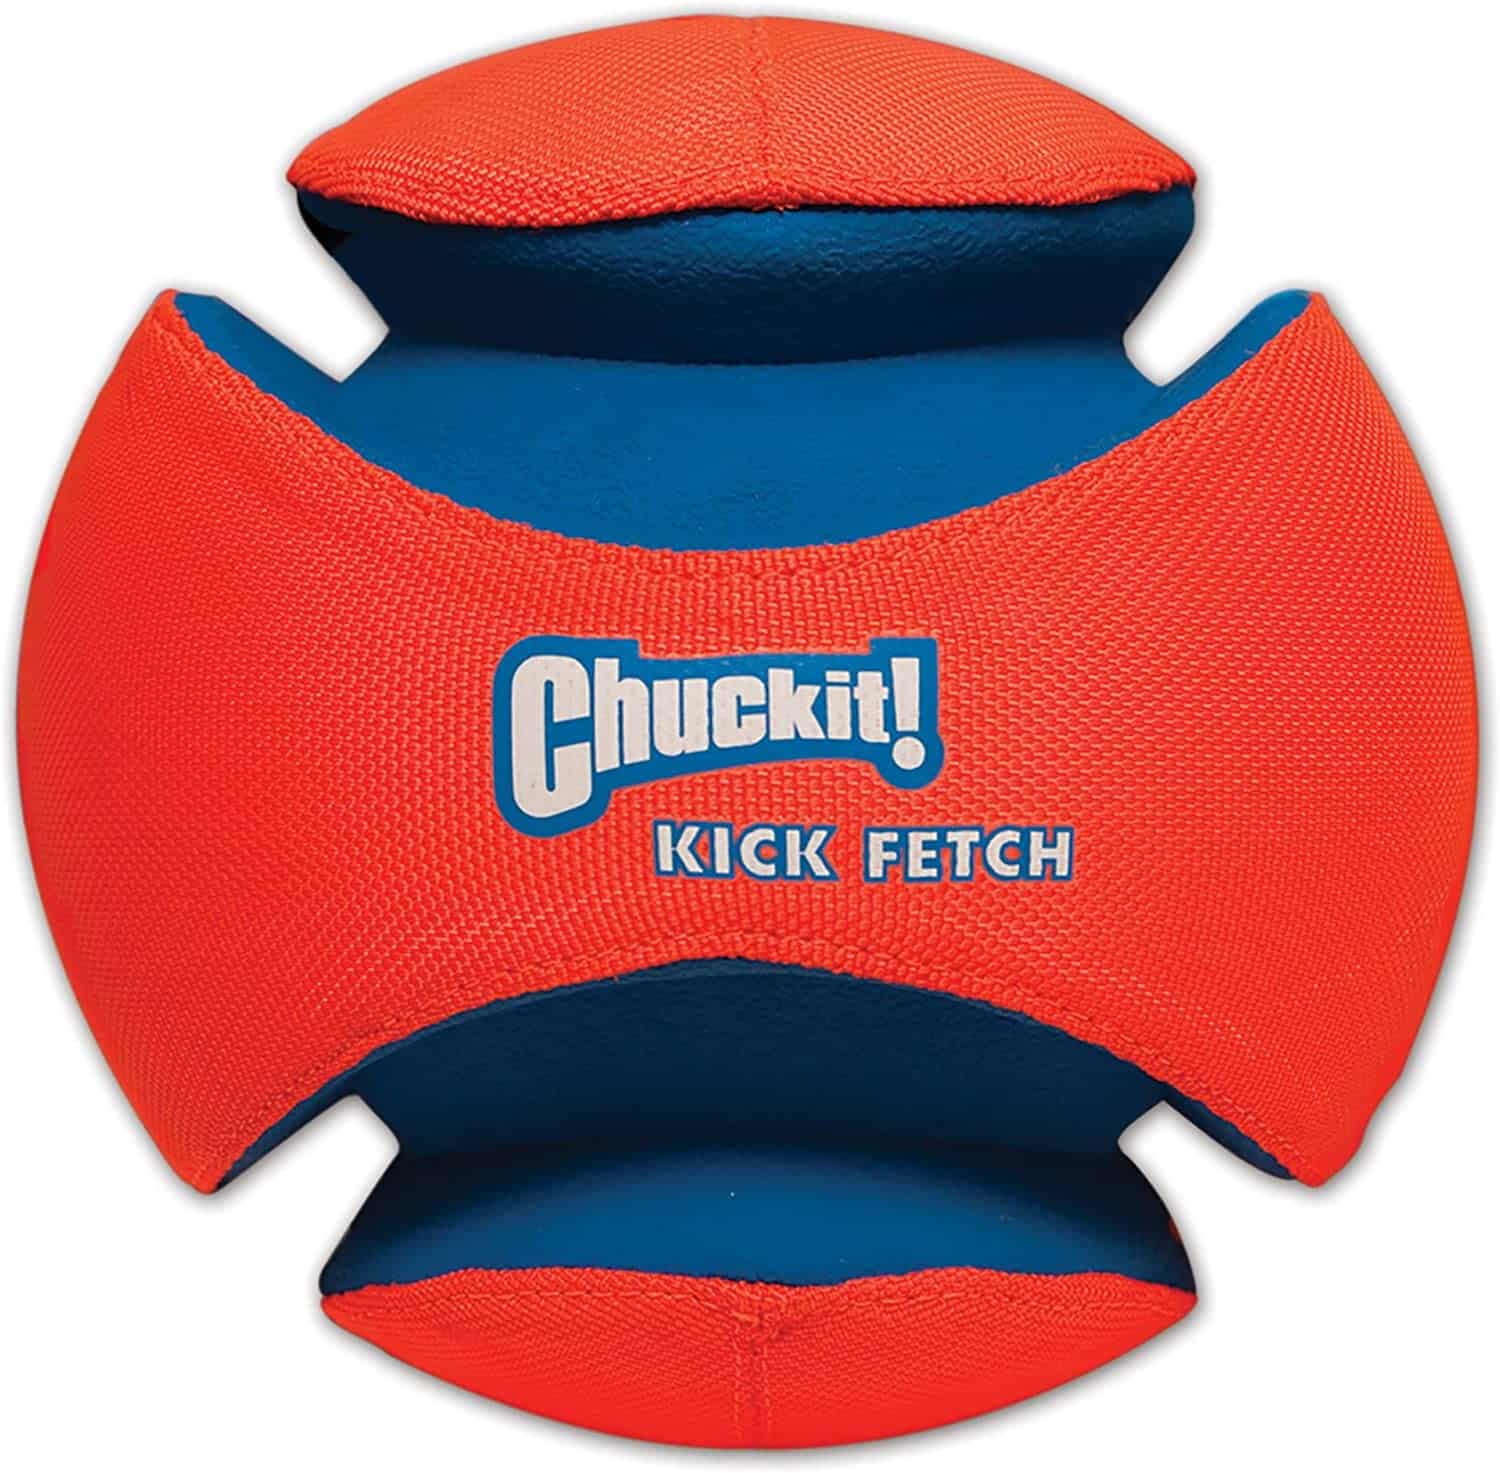 Chuckit! Kick Fetch Toy Ball for Dogs $14.99 (REG $29.99)